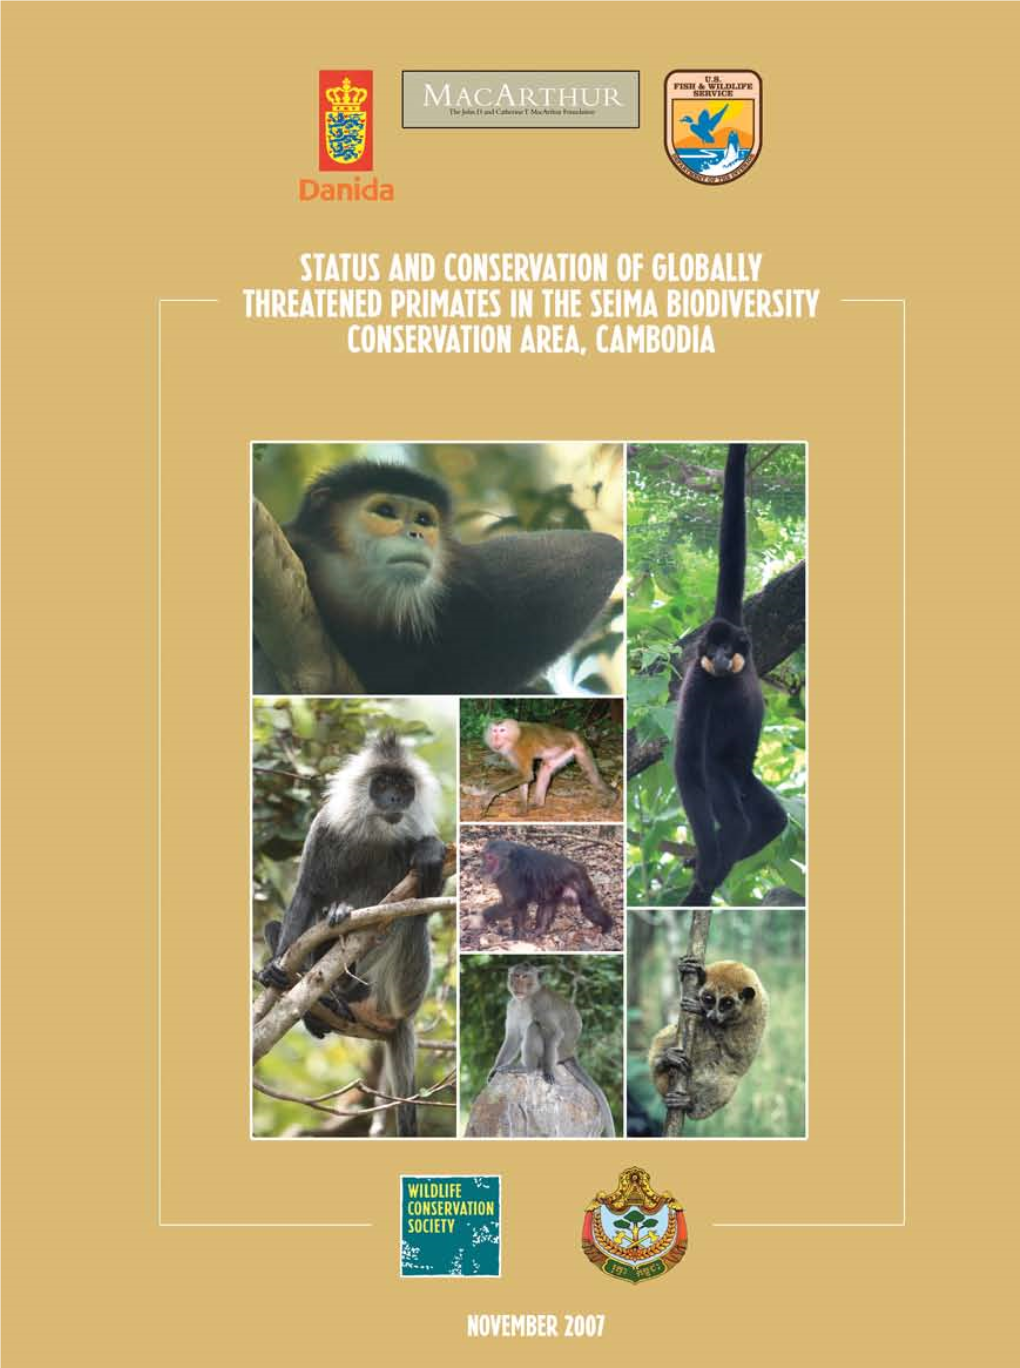 Monitoring of Globally Threatened Primates in the Seima Biodiversity